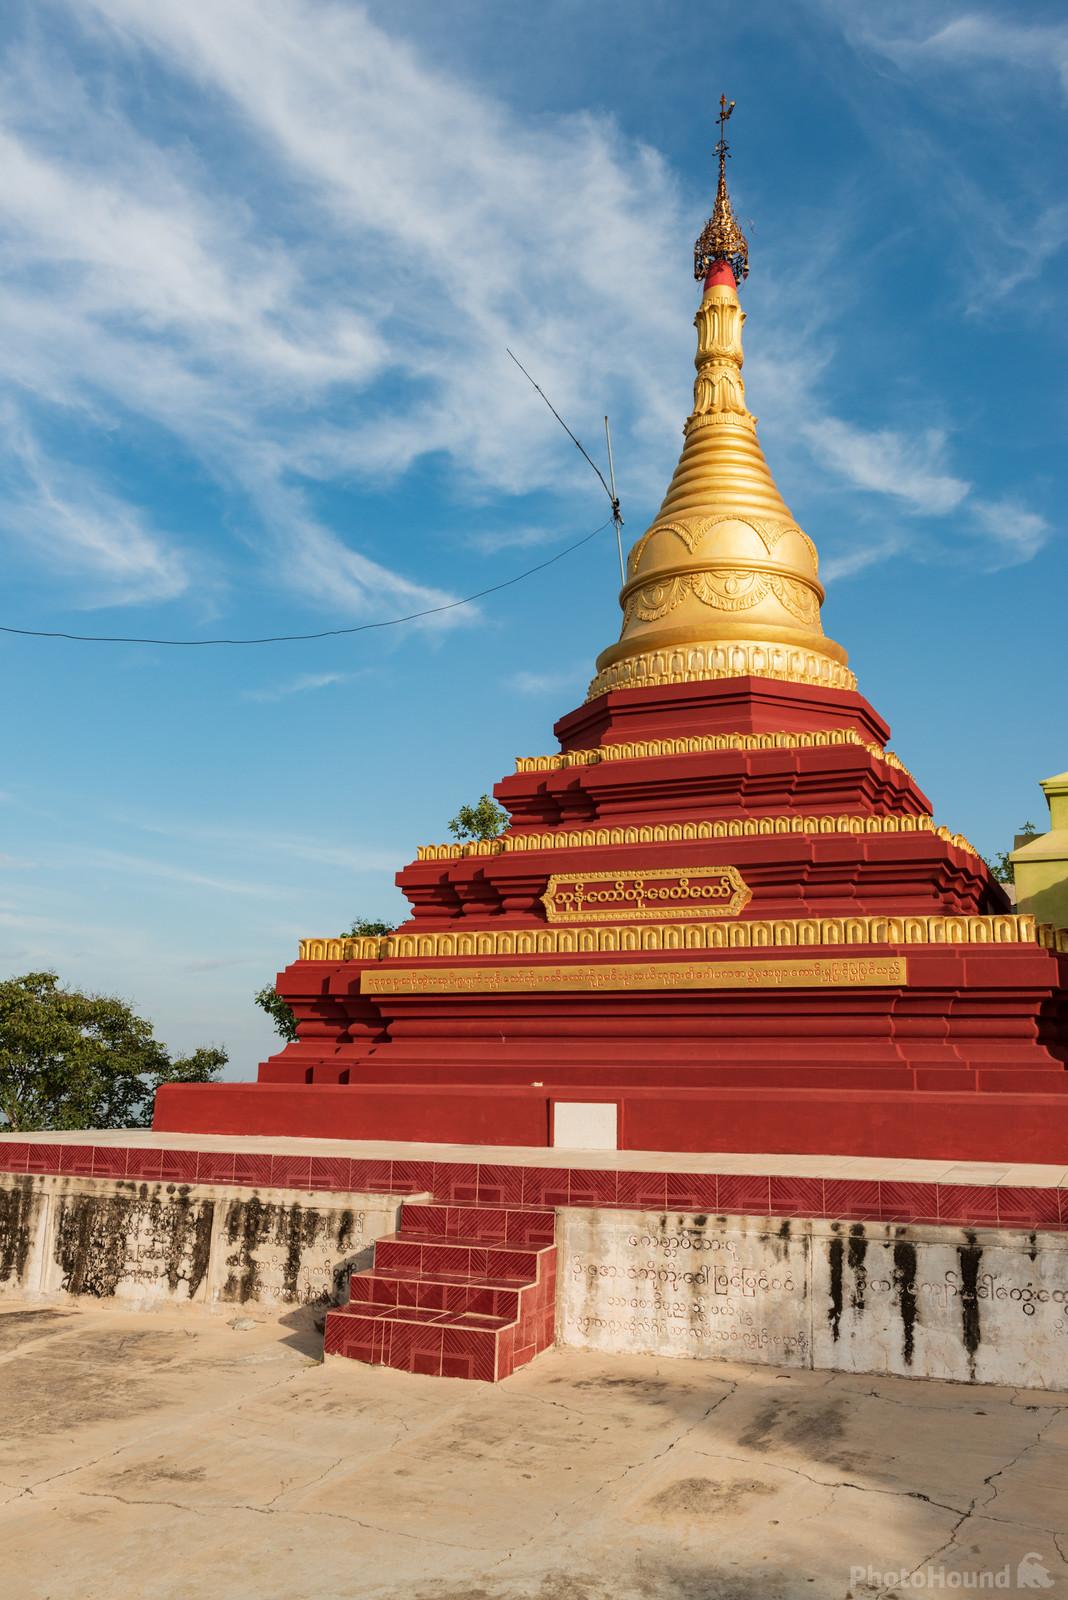 Image of Umin Thonze Pagoda by Luka Esenko